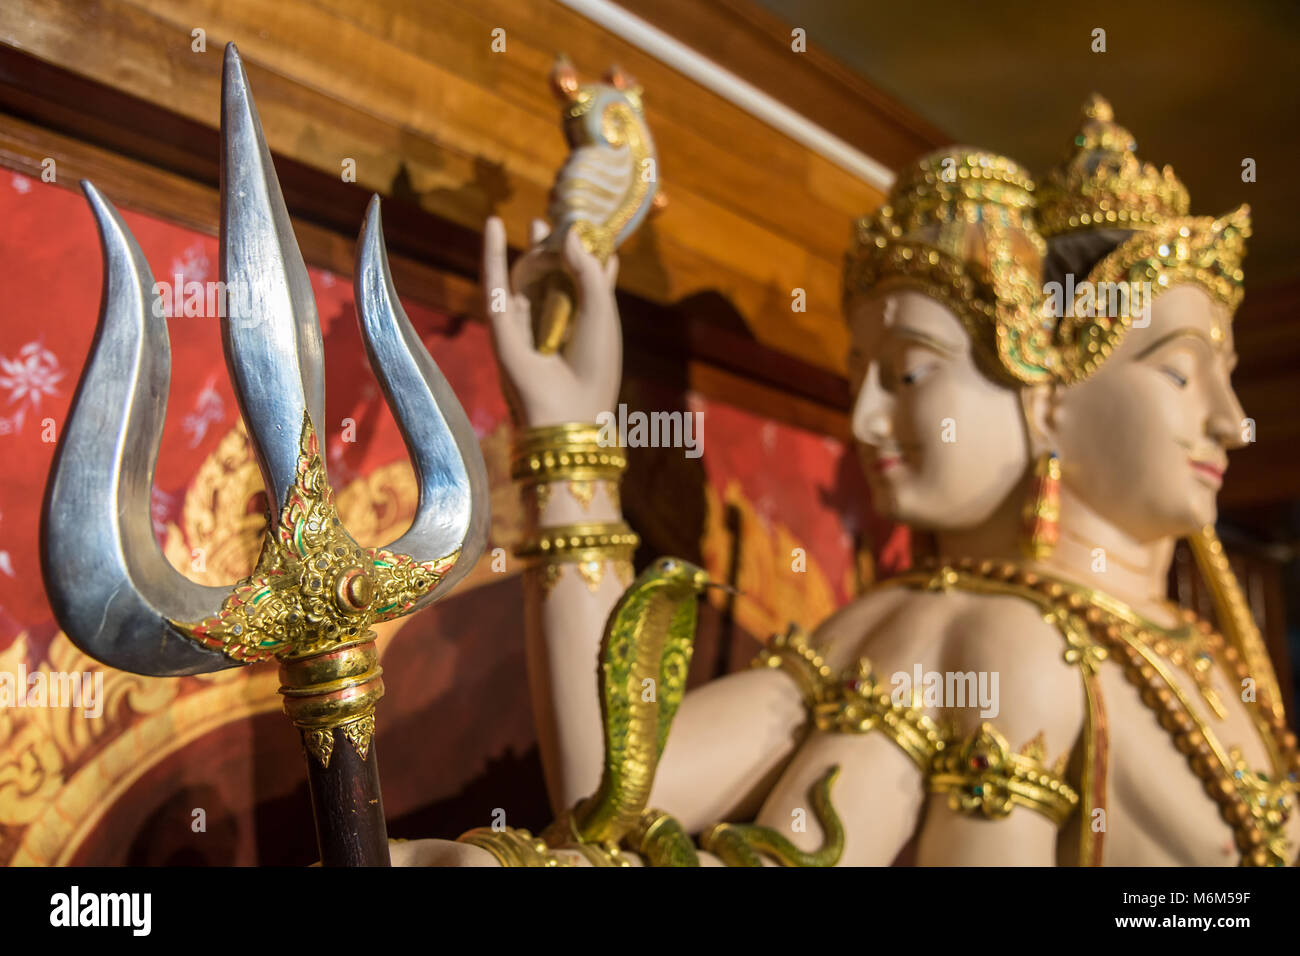 SAMUT PRAKAN. THAILAND, JUN 05 2017, Hindu God Shiva sculpture in monastery, Thailand. Lord Shiva statue inside Hindu temple. Stock Photo